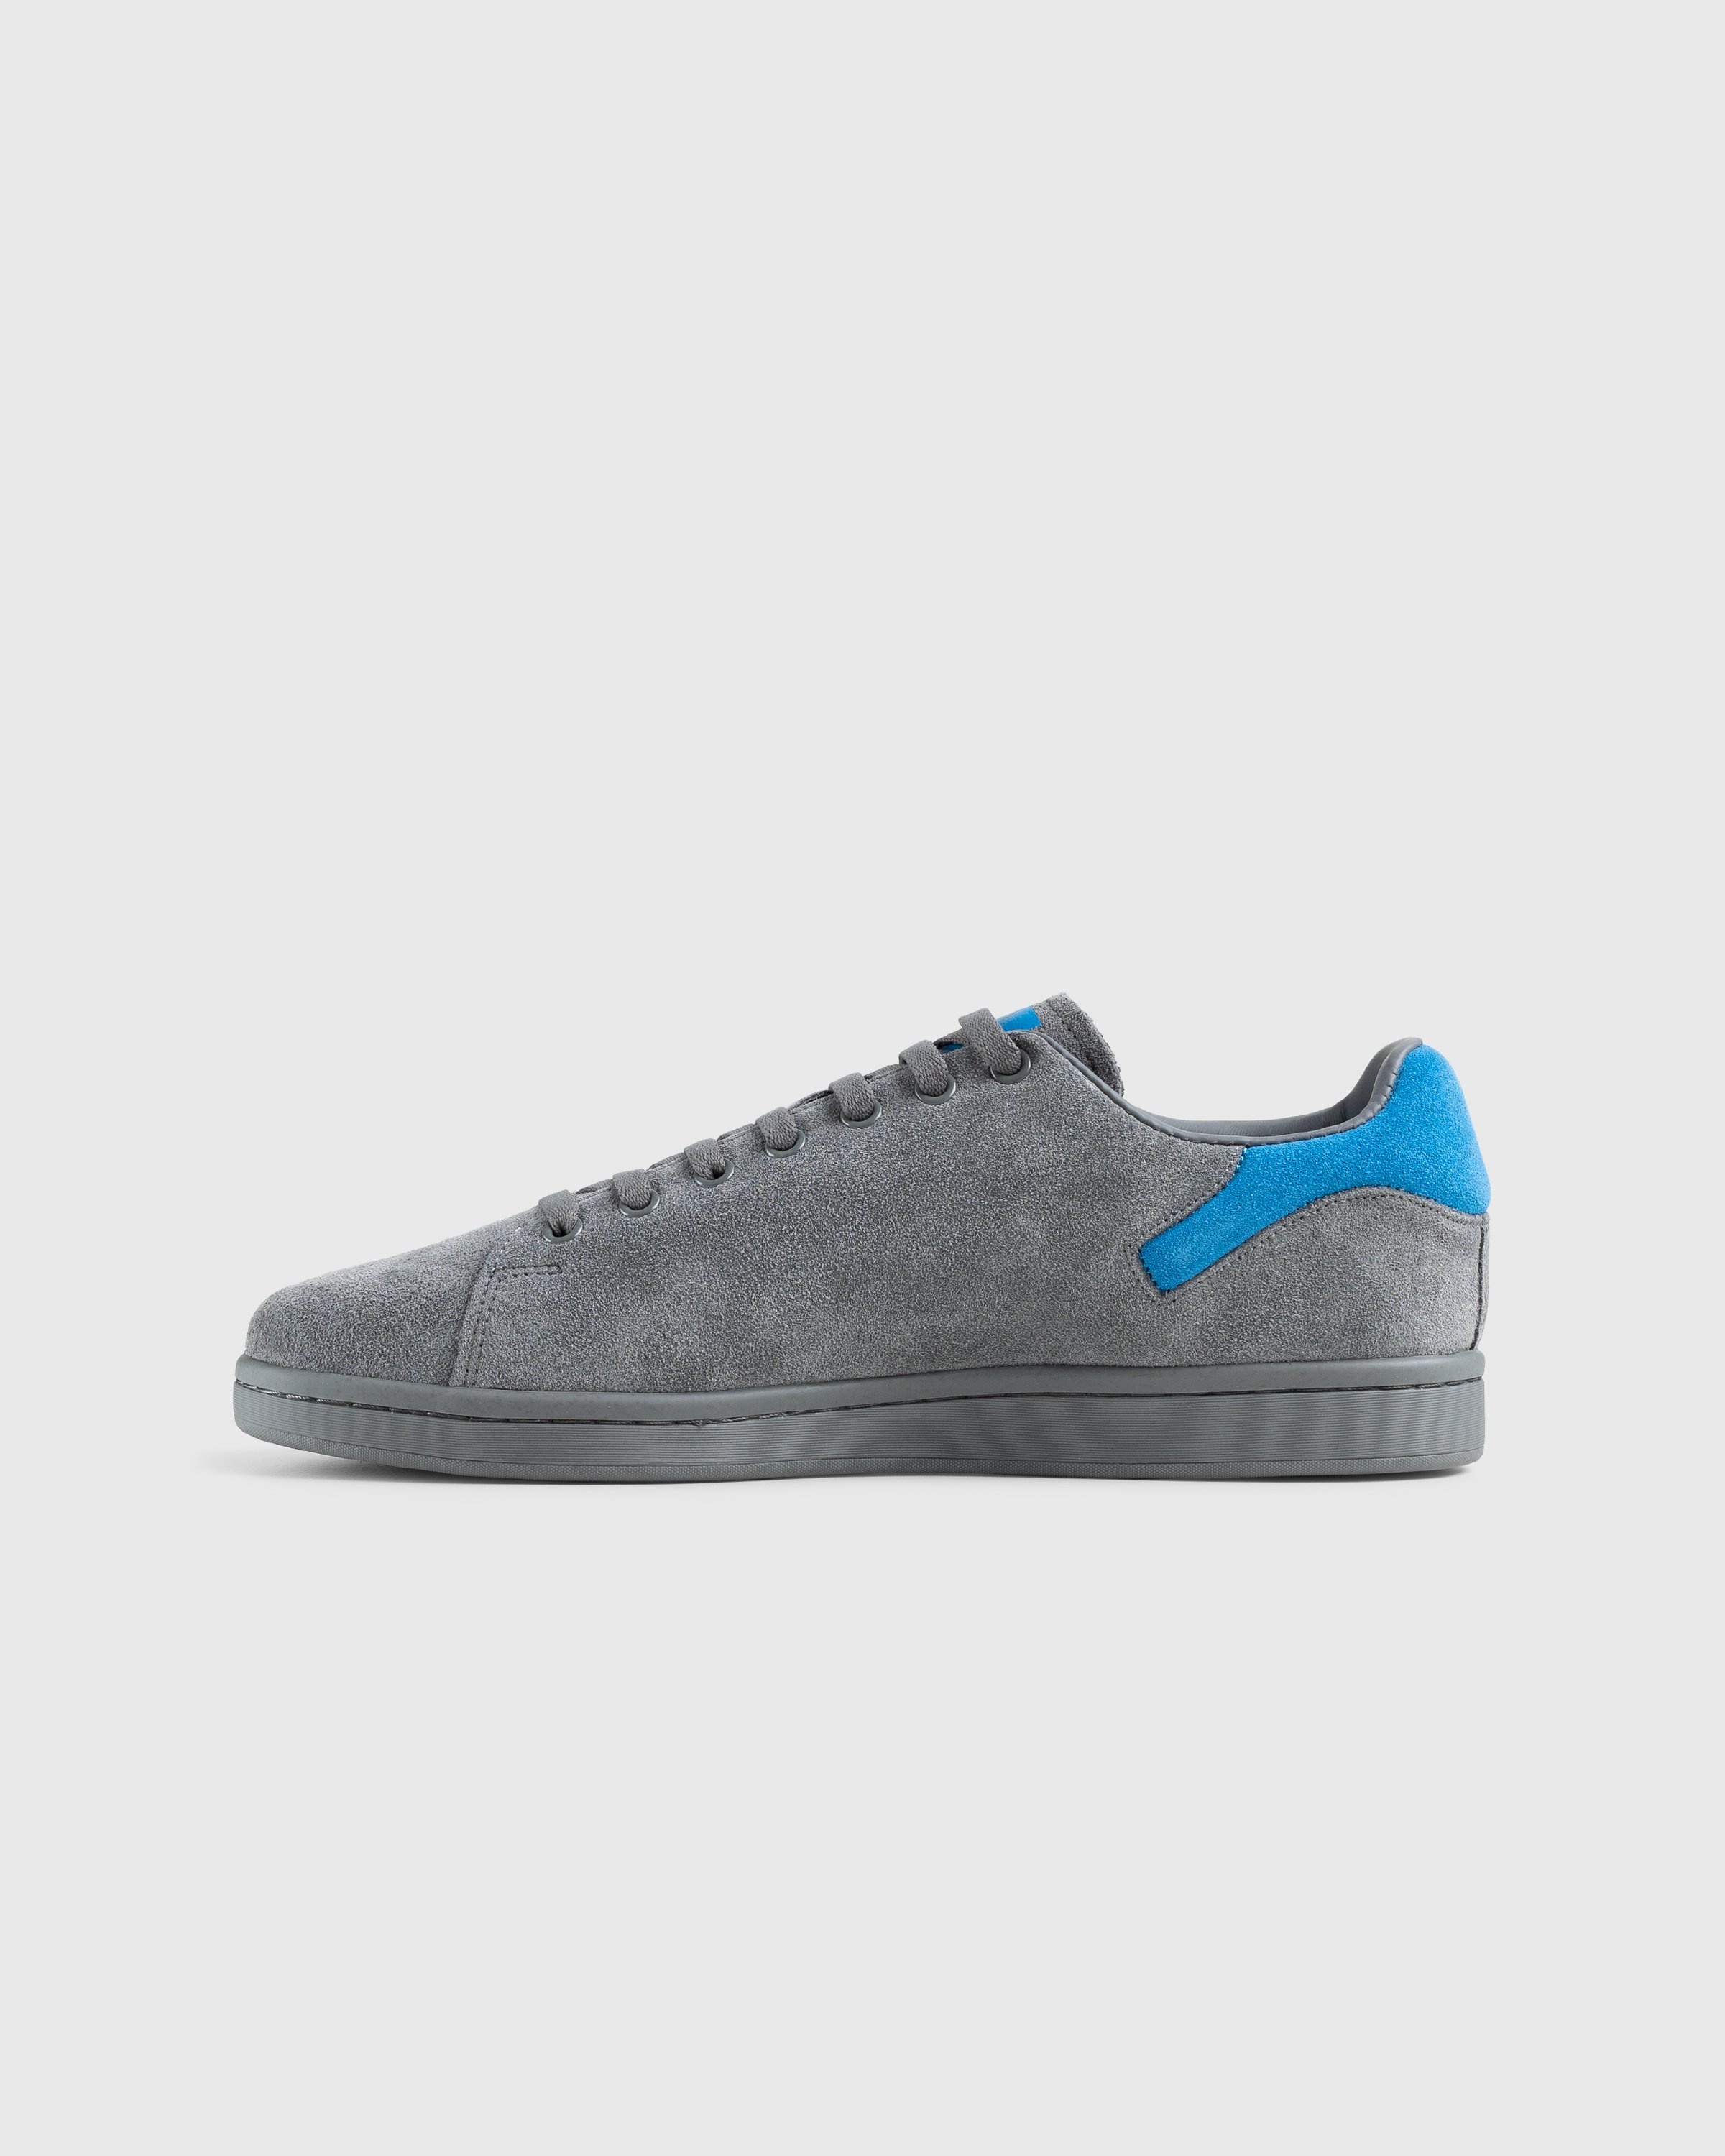 Raf Simons – Orion Grey - Sneakers - Grey - Image 2